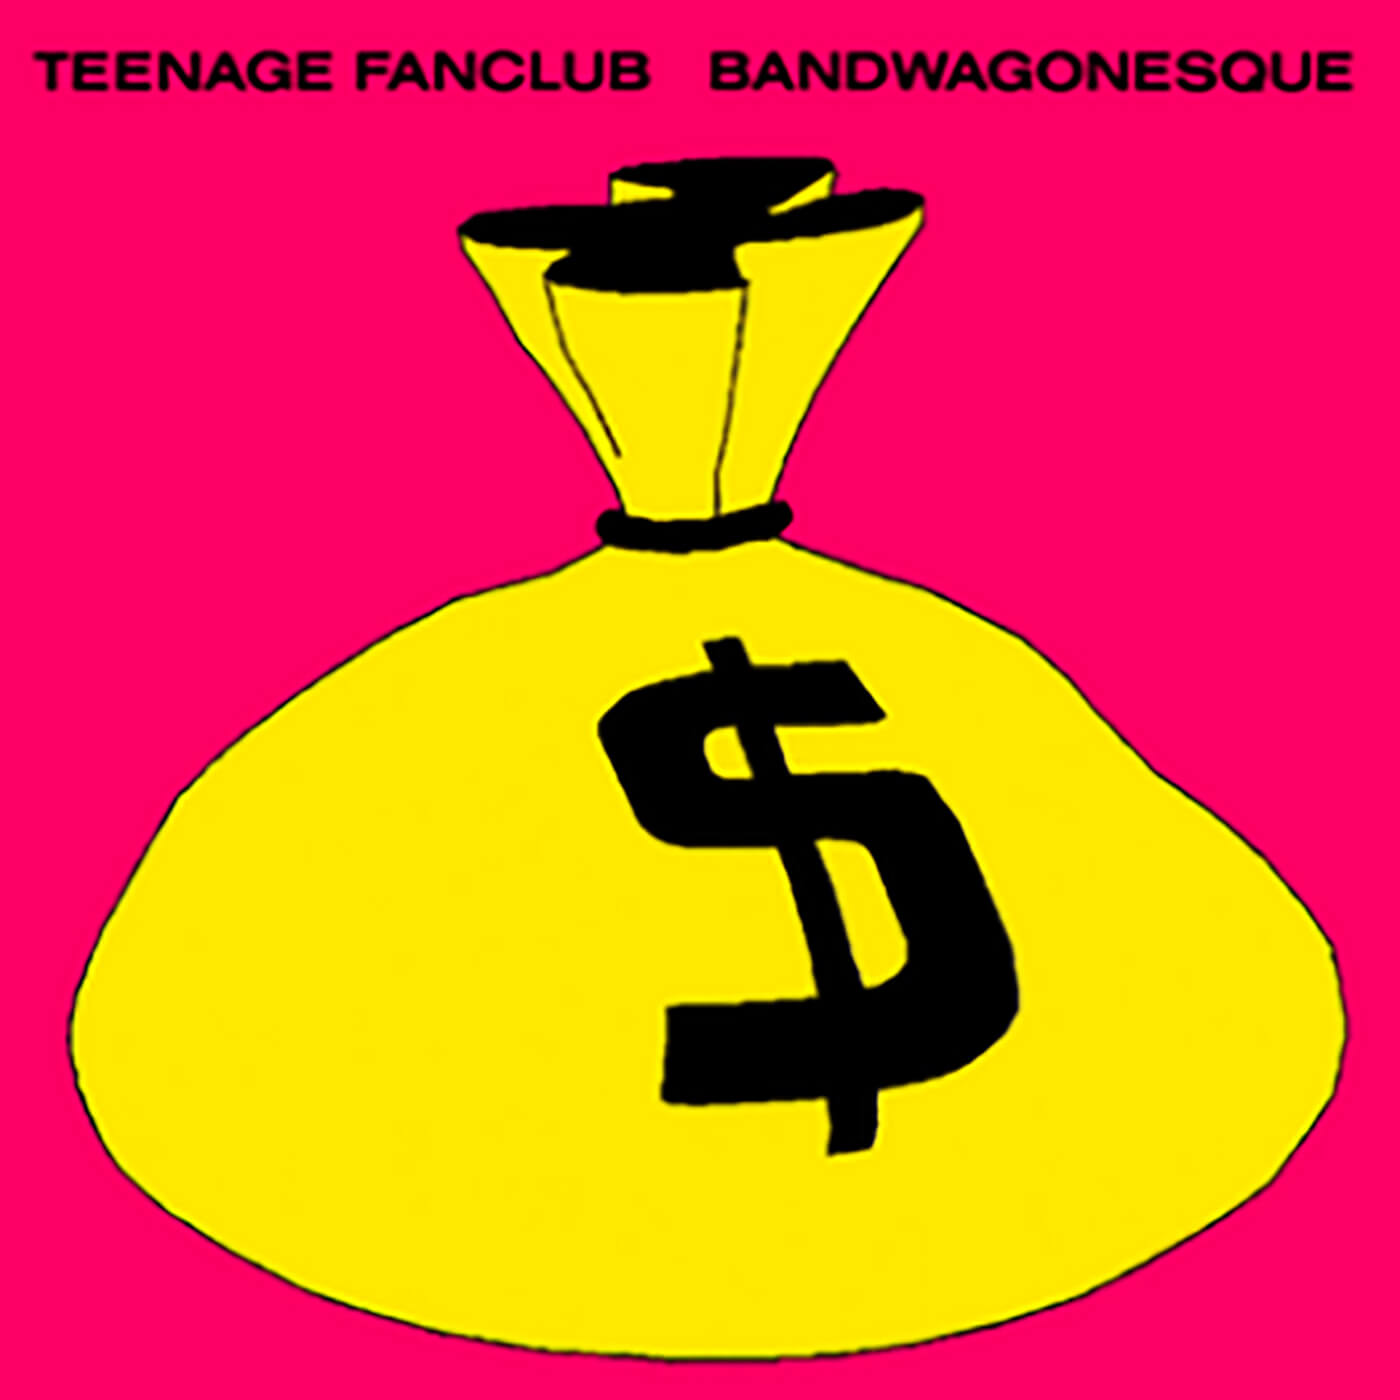 TEENAGE FANCLUB - Bandwagonesque (NAD 2023) - LP - Transparent Yellow Vinyl